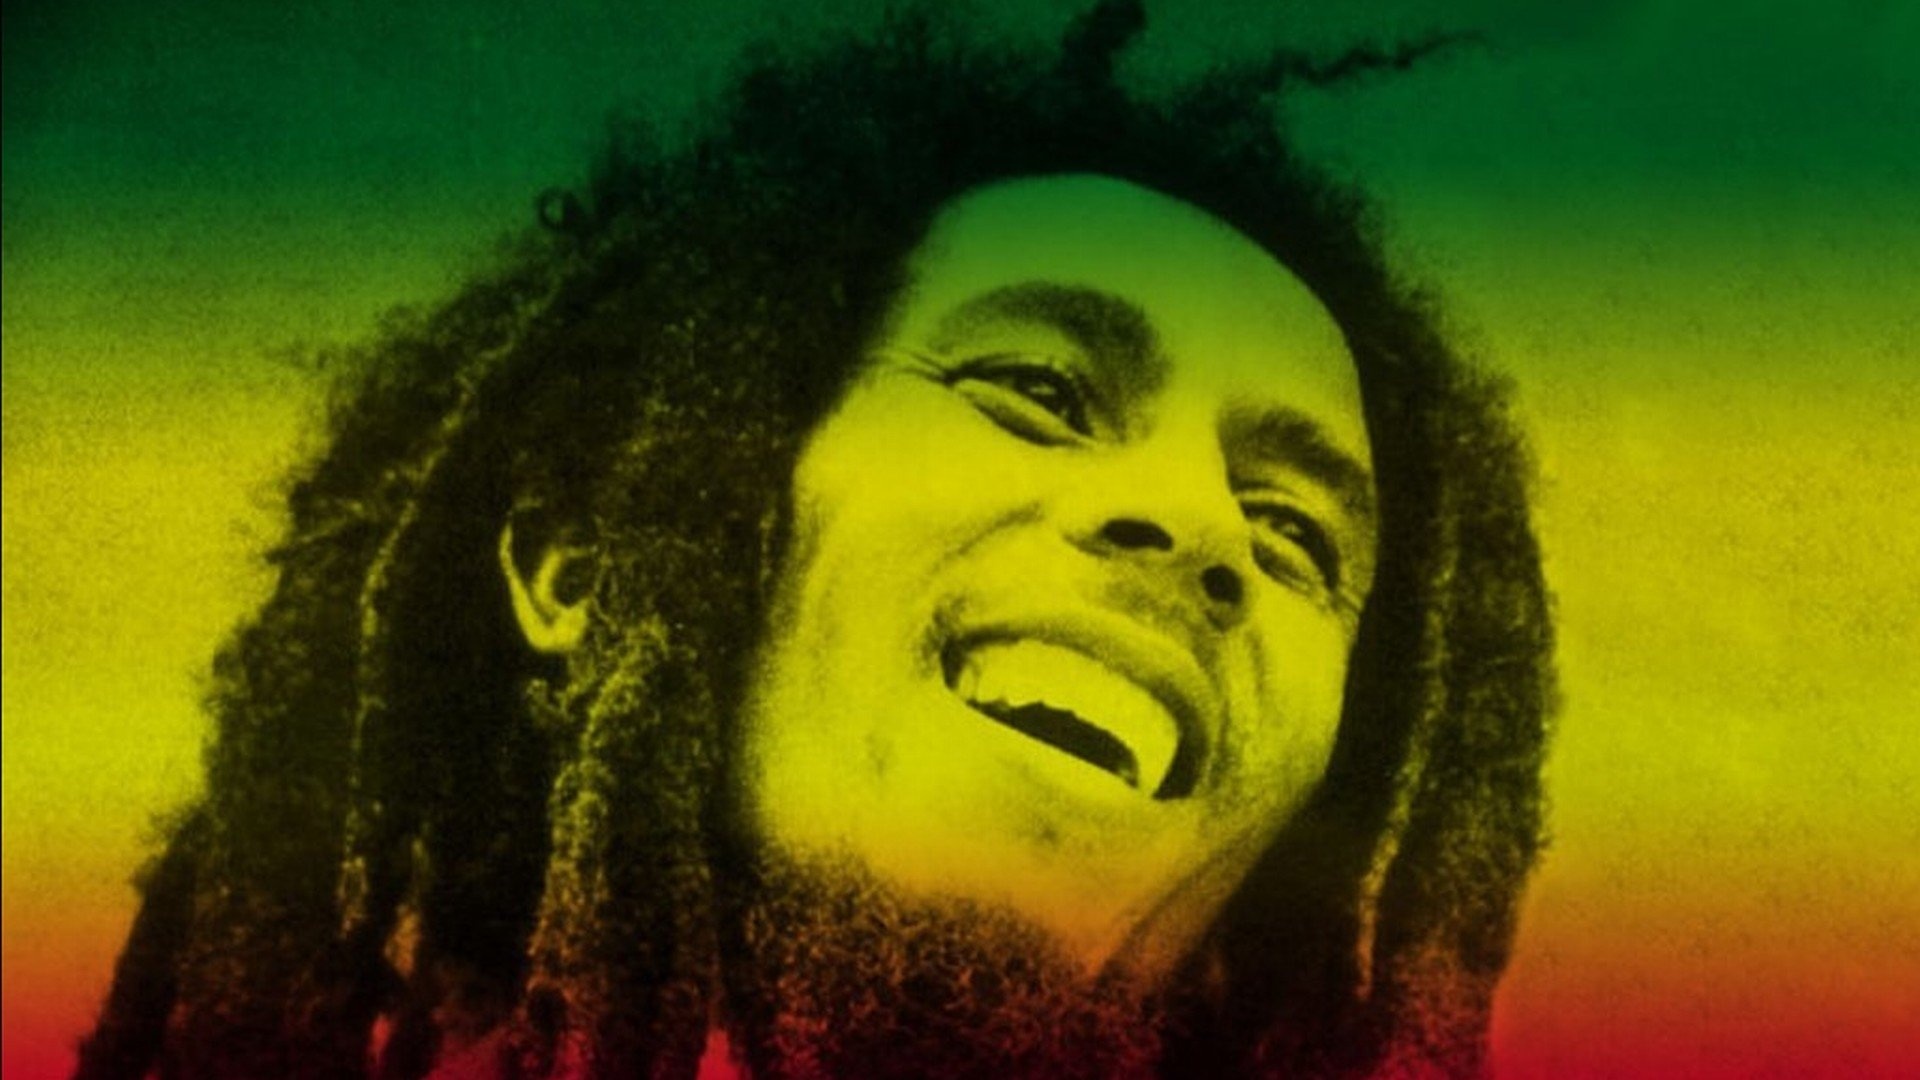 Bob Marley: A global figure in popular culture, Sun Is Shining, 1971. 1920x1080 Full HD Wallpaper.